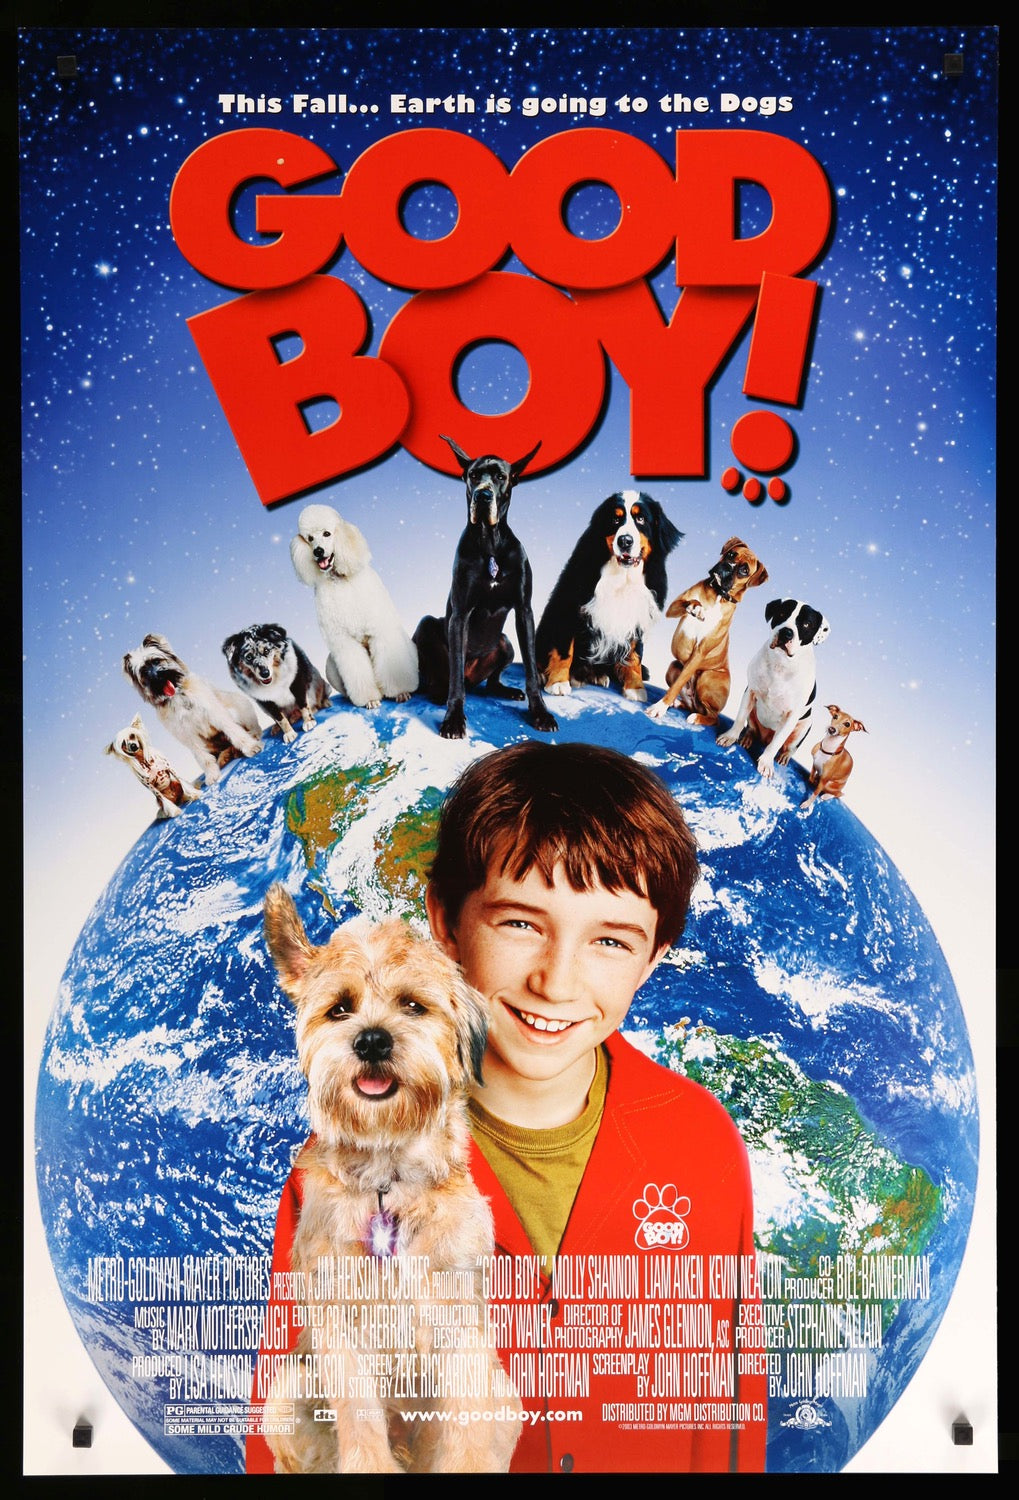 Good Boy (2003) original movie poster for sale at Original Film Art